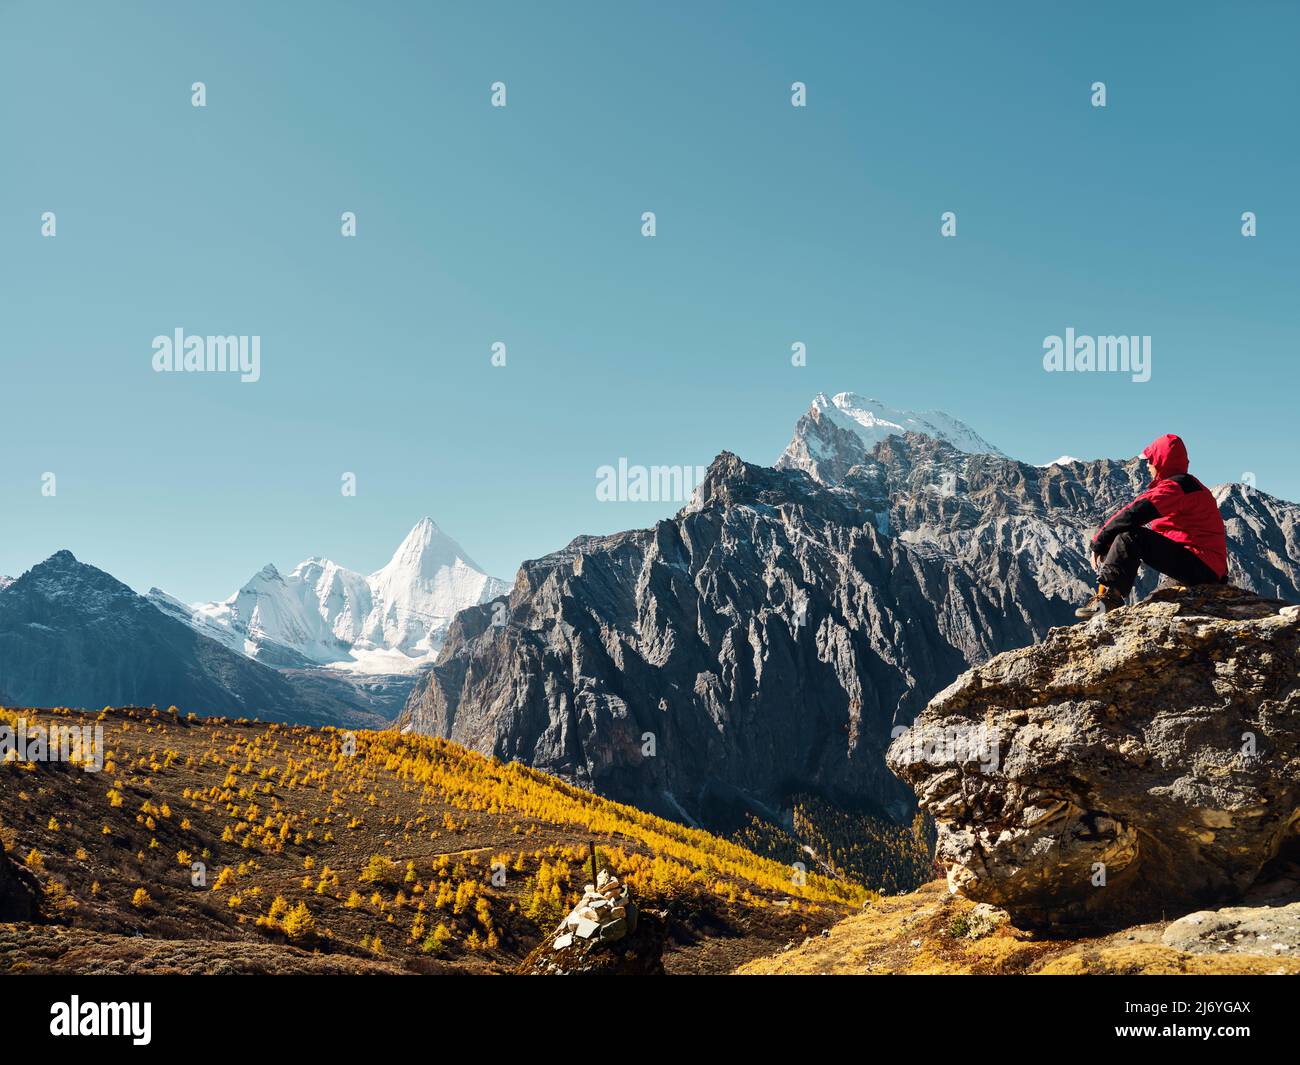 asian man sitting on top of rock looking at Yangmaiyong (or Jampayang in Tibetan) mountain peak in the distance in Yading, Daocheng County, Sichuan Pr Stock Photo